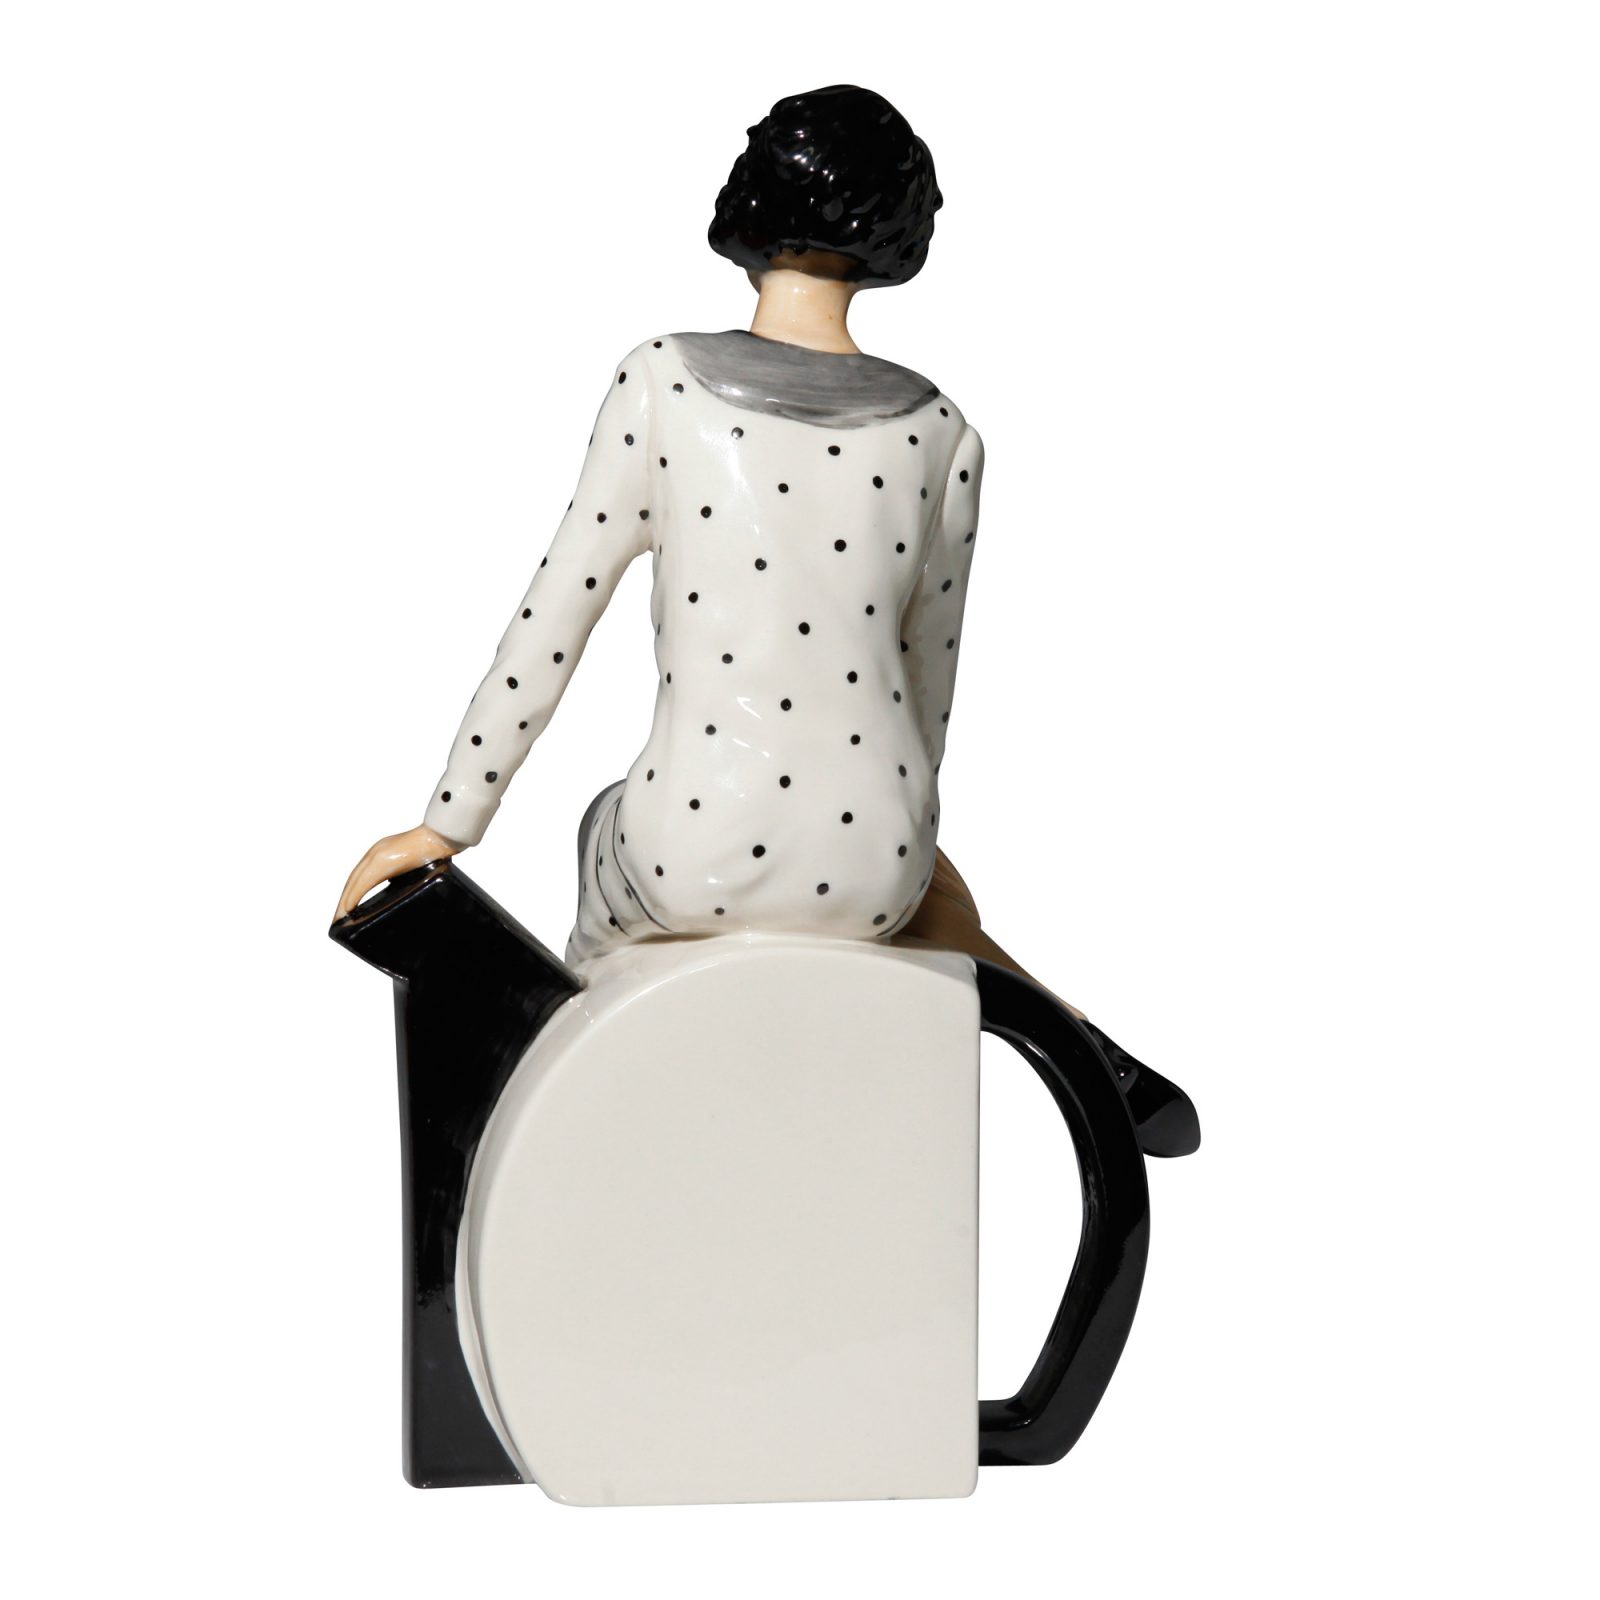 Clarice Teatime Seated - Peggy Davies Figurine